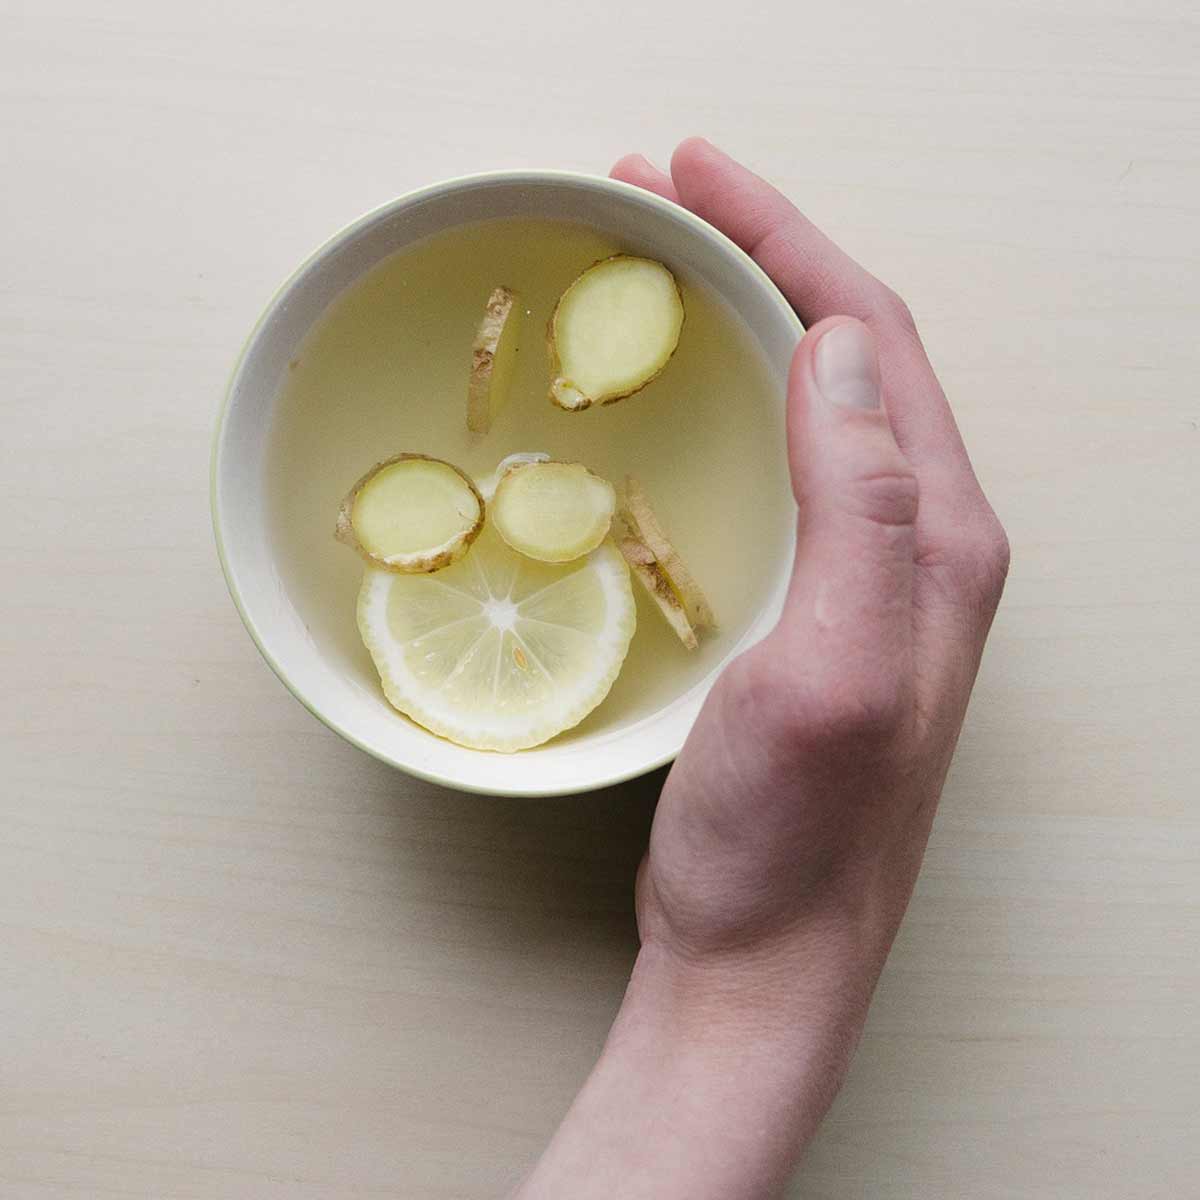 Hot Water and Lemon